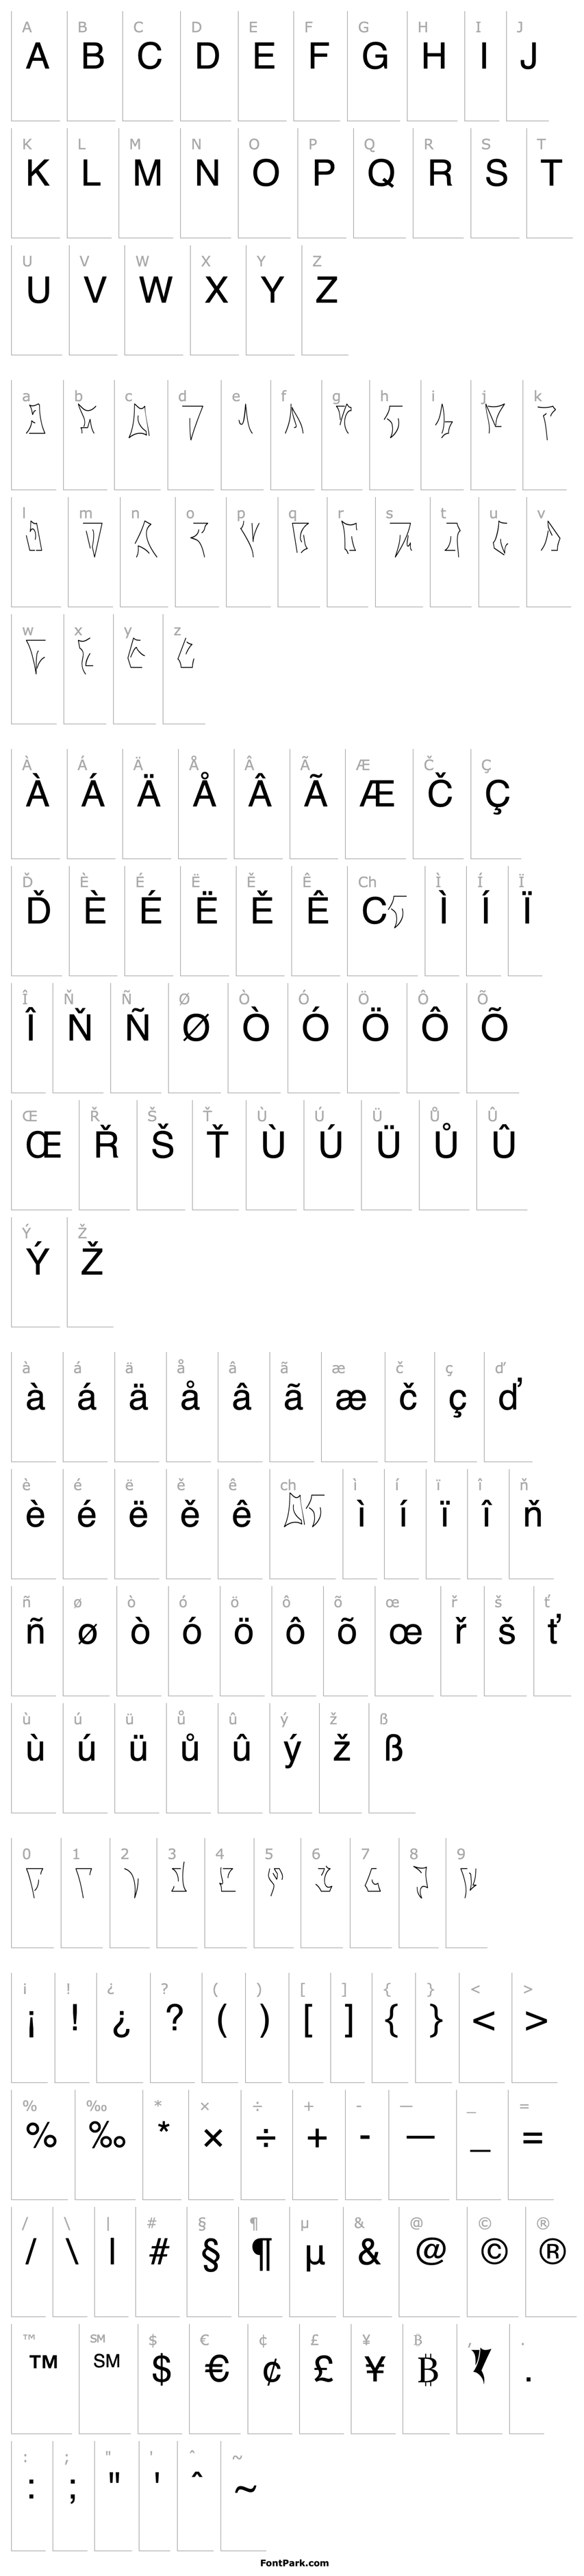 Overview Klingo